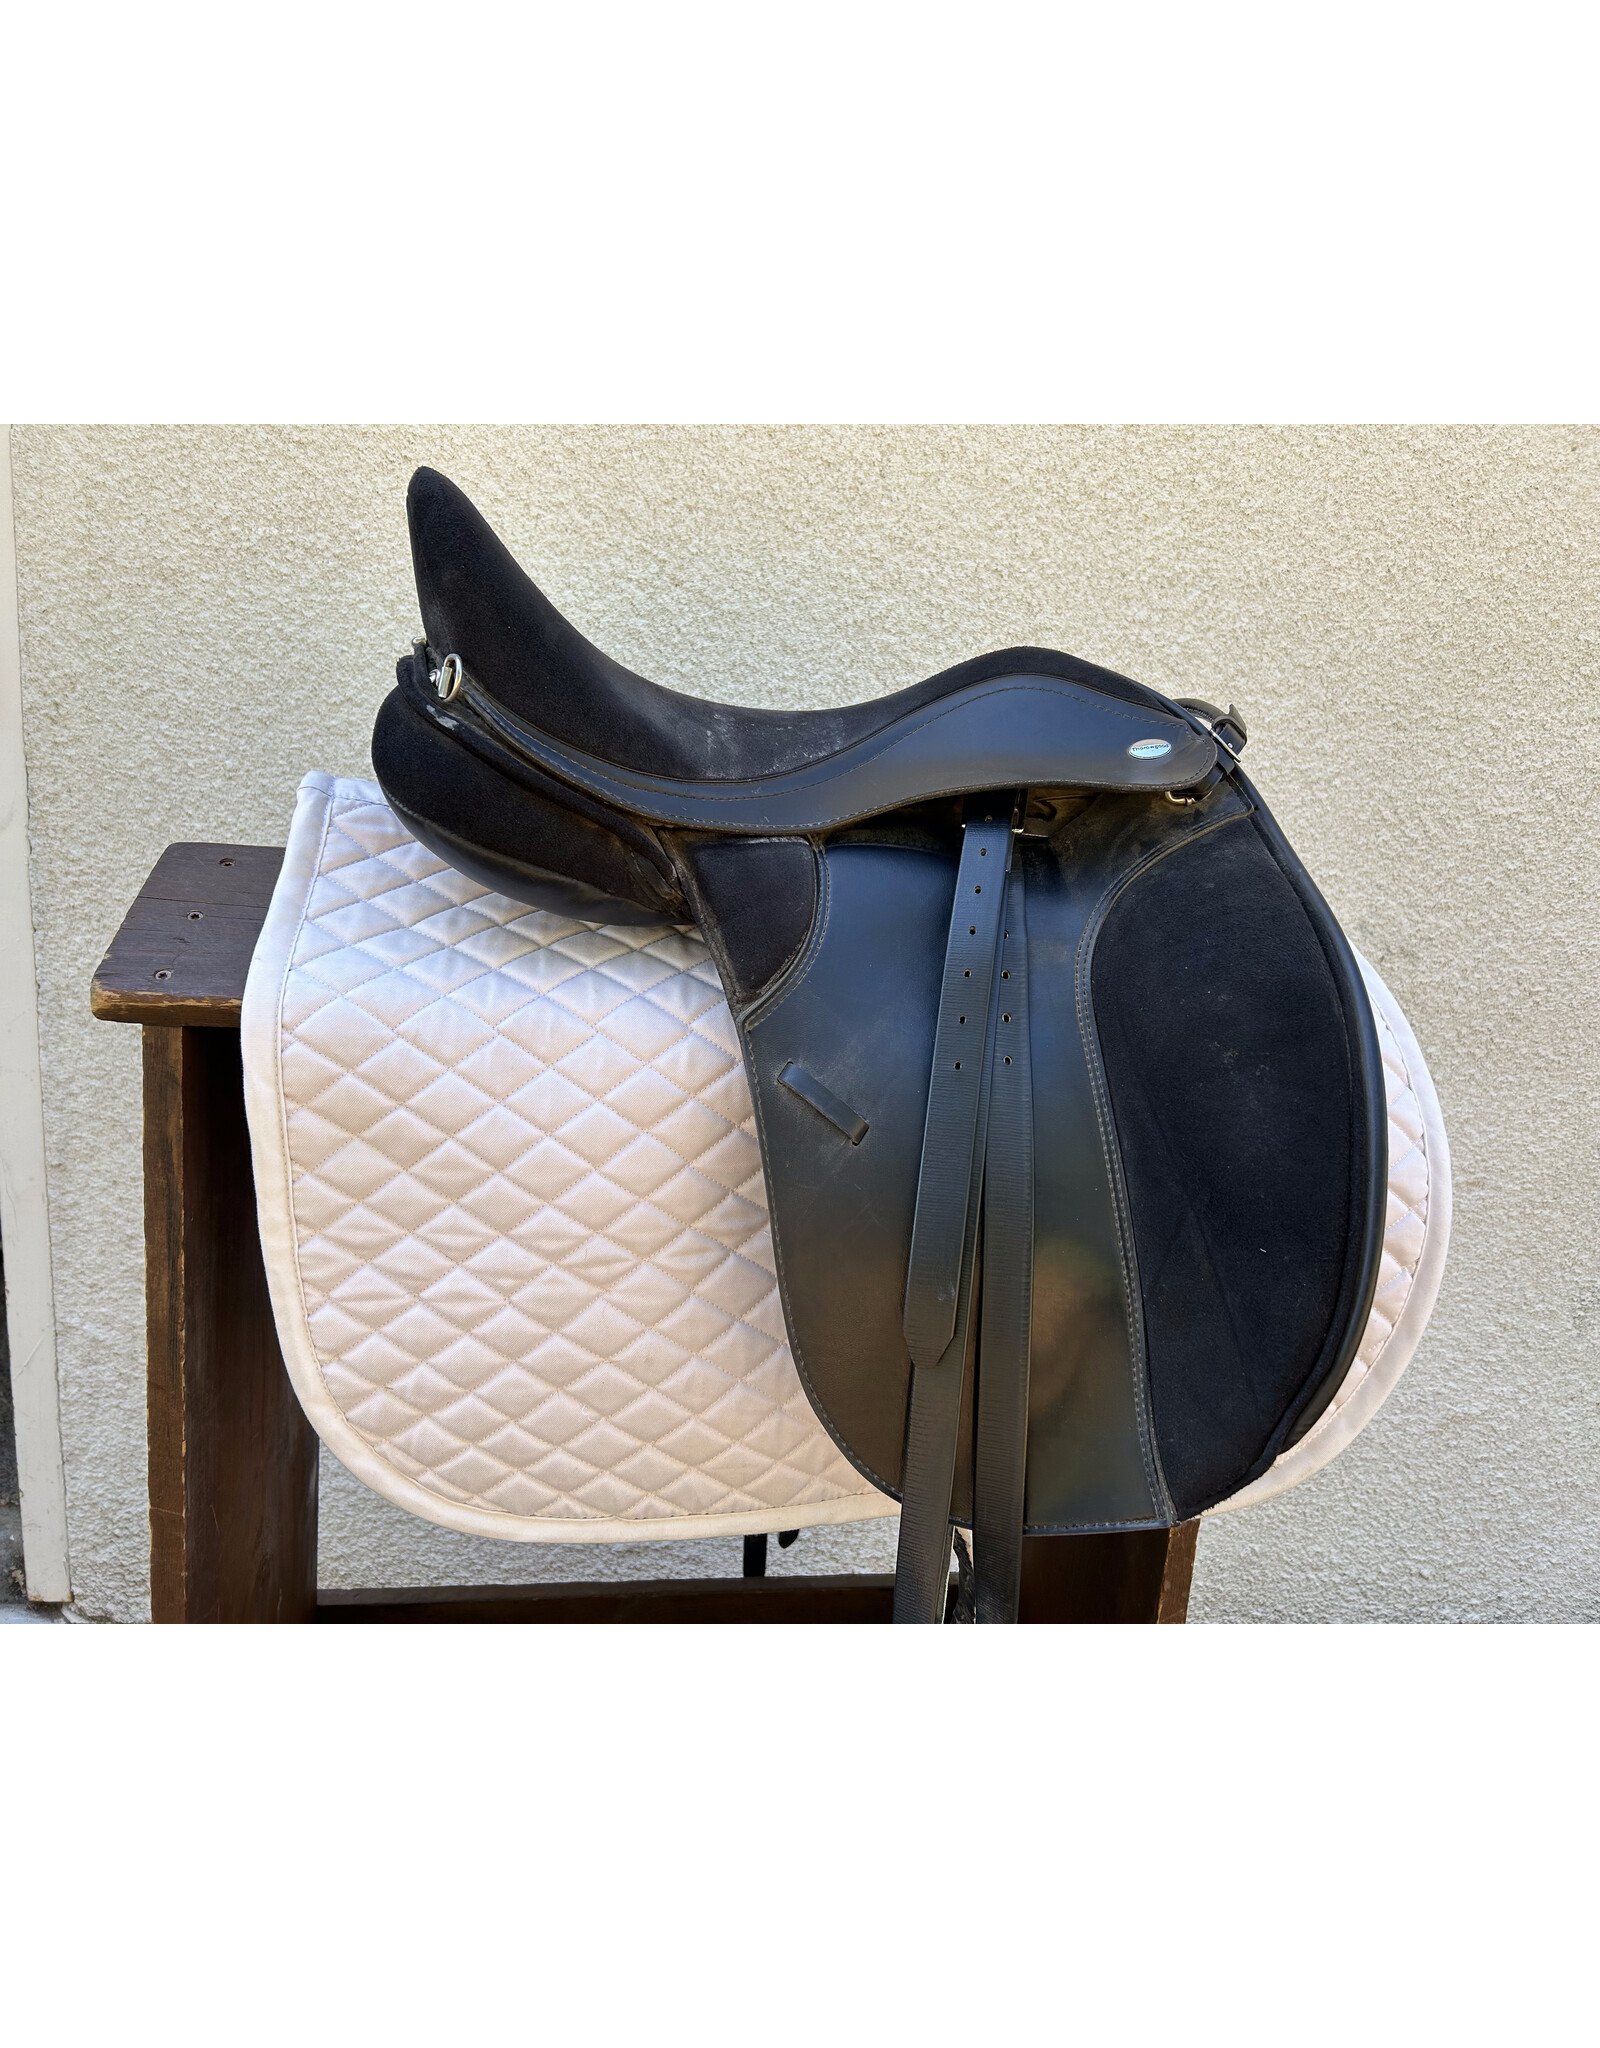 Thorowgood Dressage Saddle 17" Adjustable Gullet